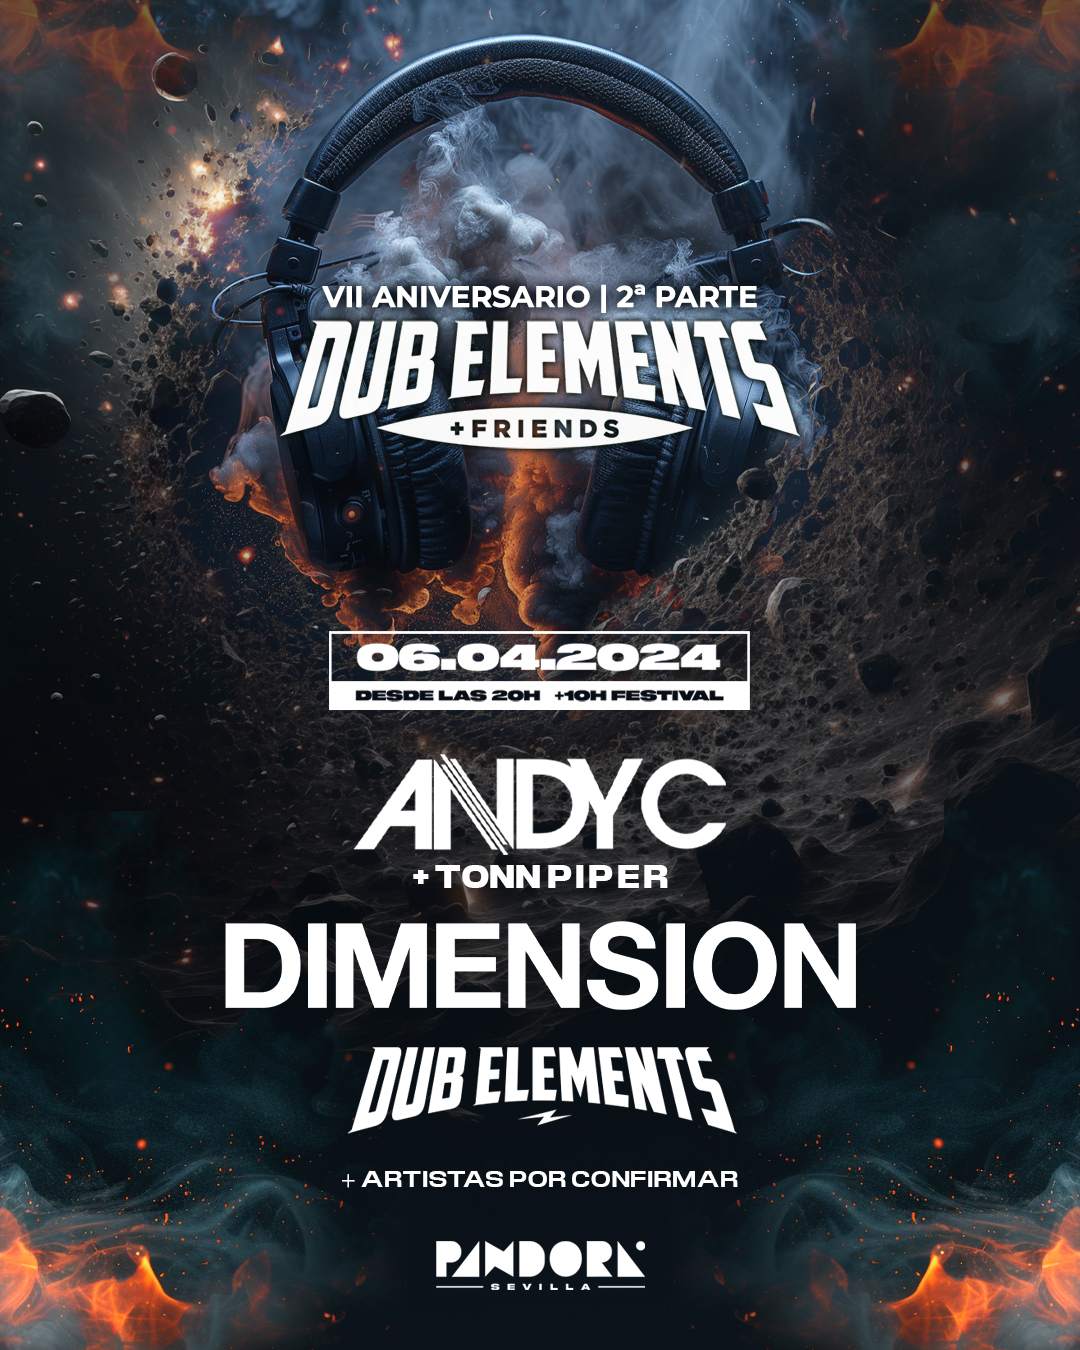 Dub Elements + Friends con Andy C y Dimension - フライヤー表